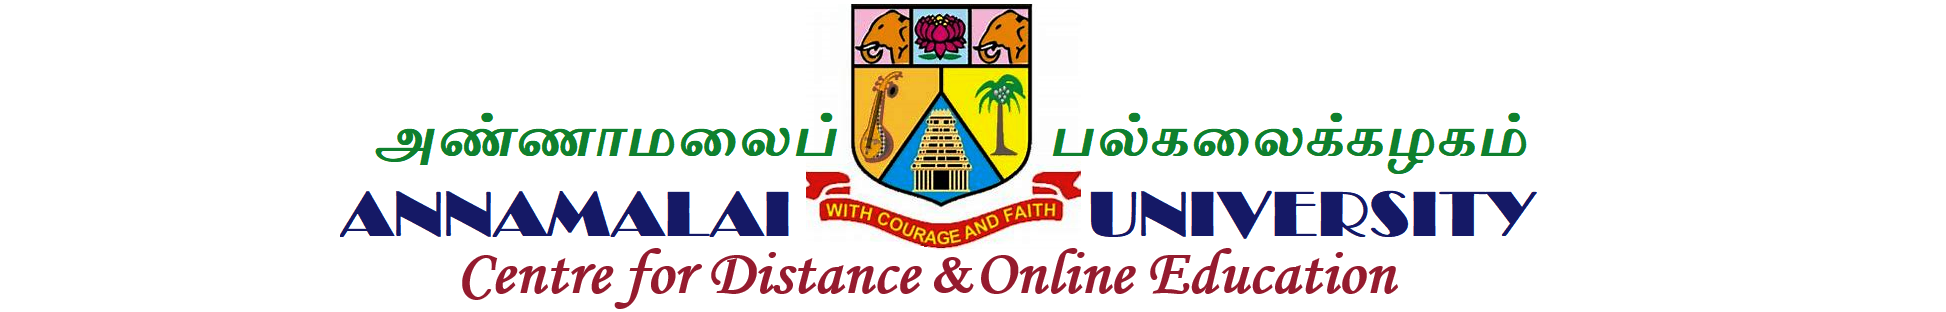 annamalai university distance education mba course fees details